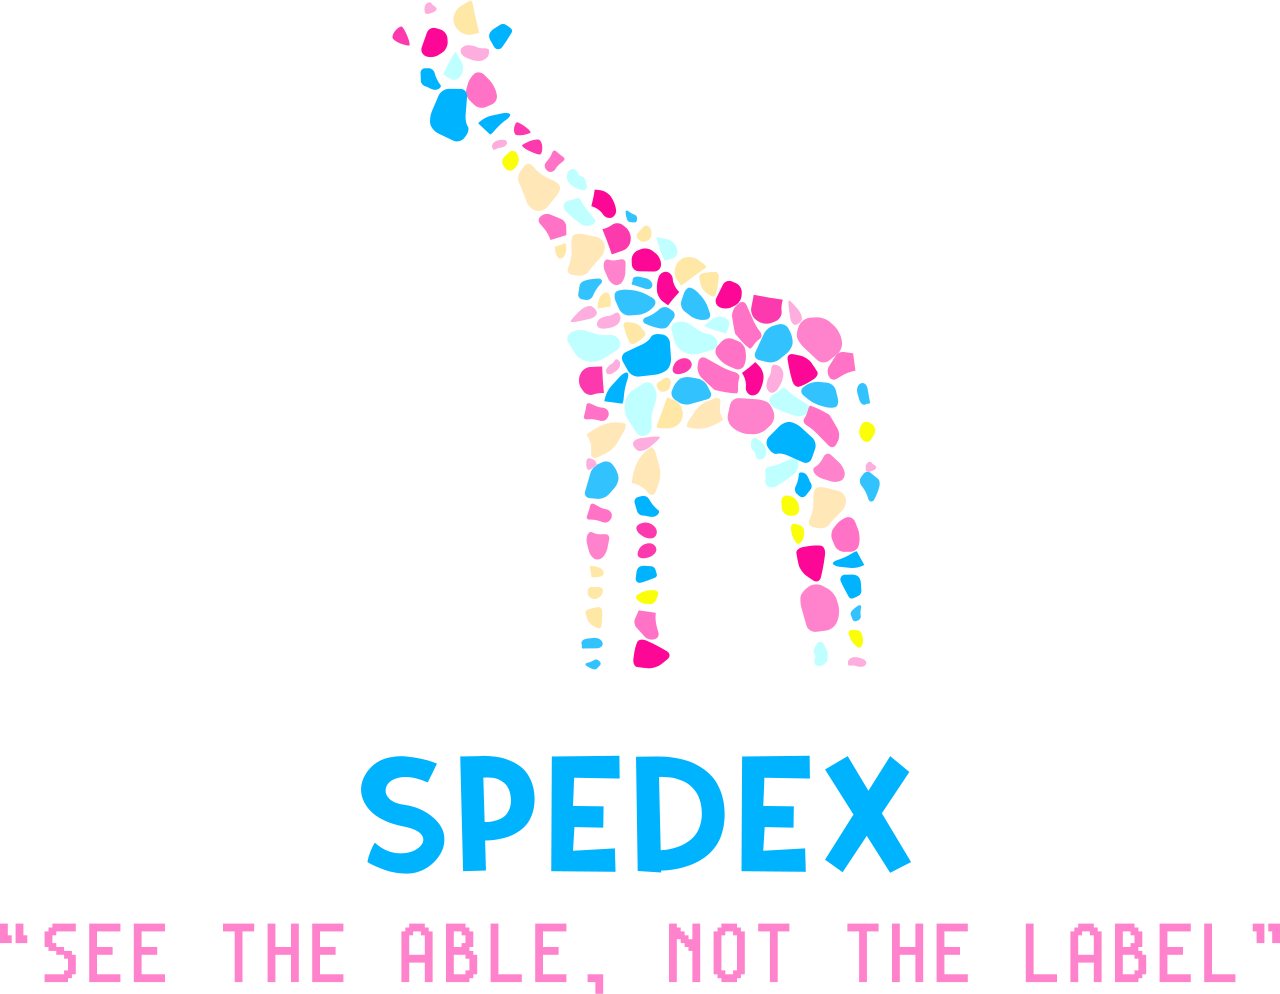 SpedEx's logo